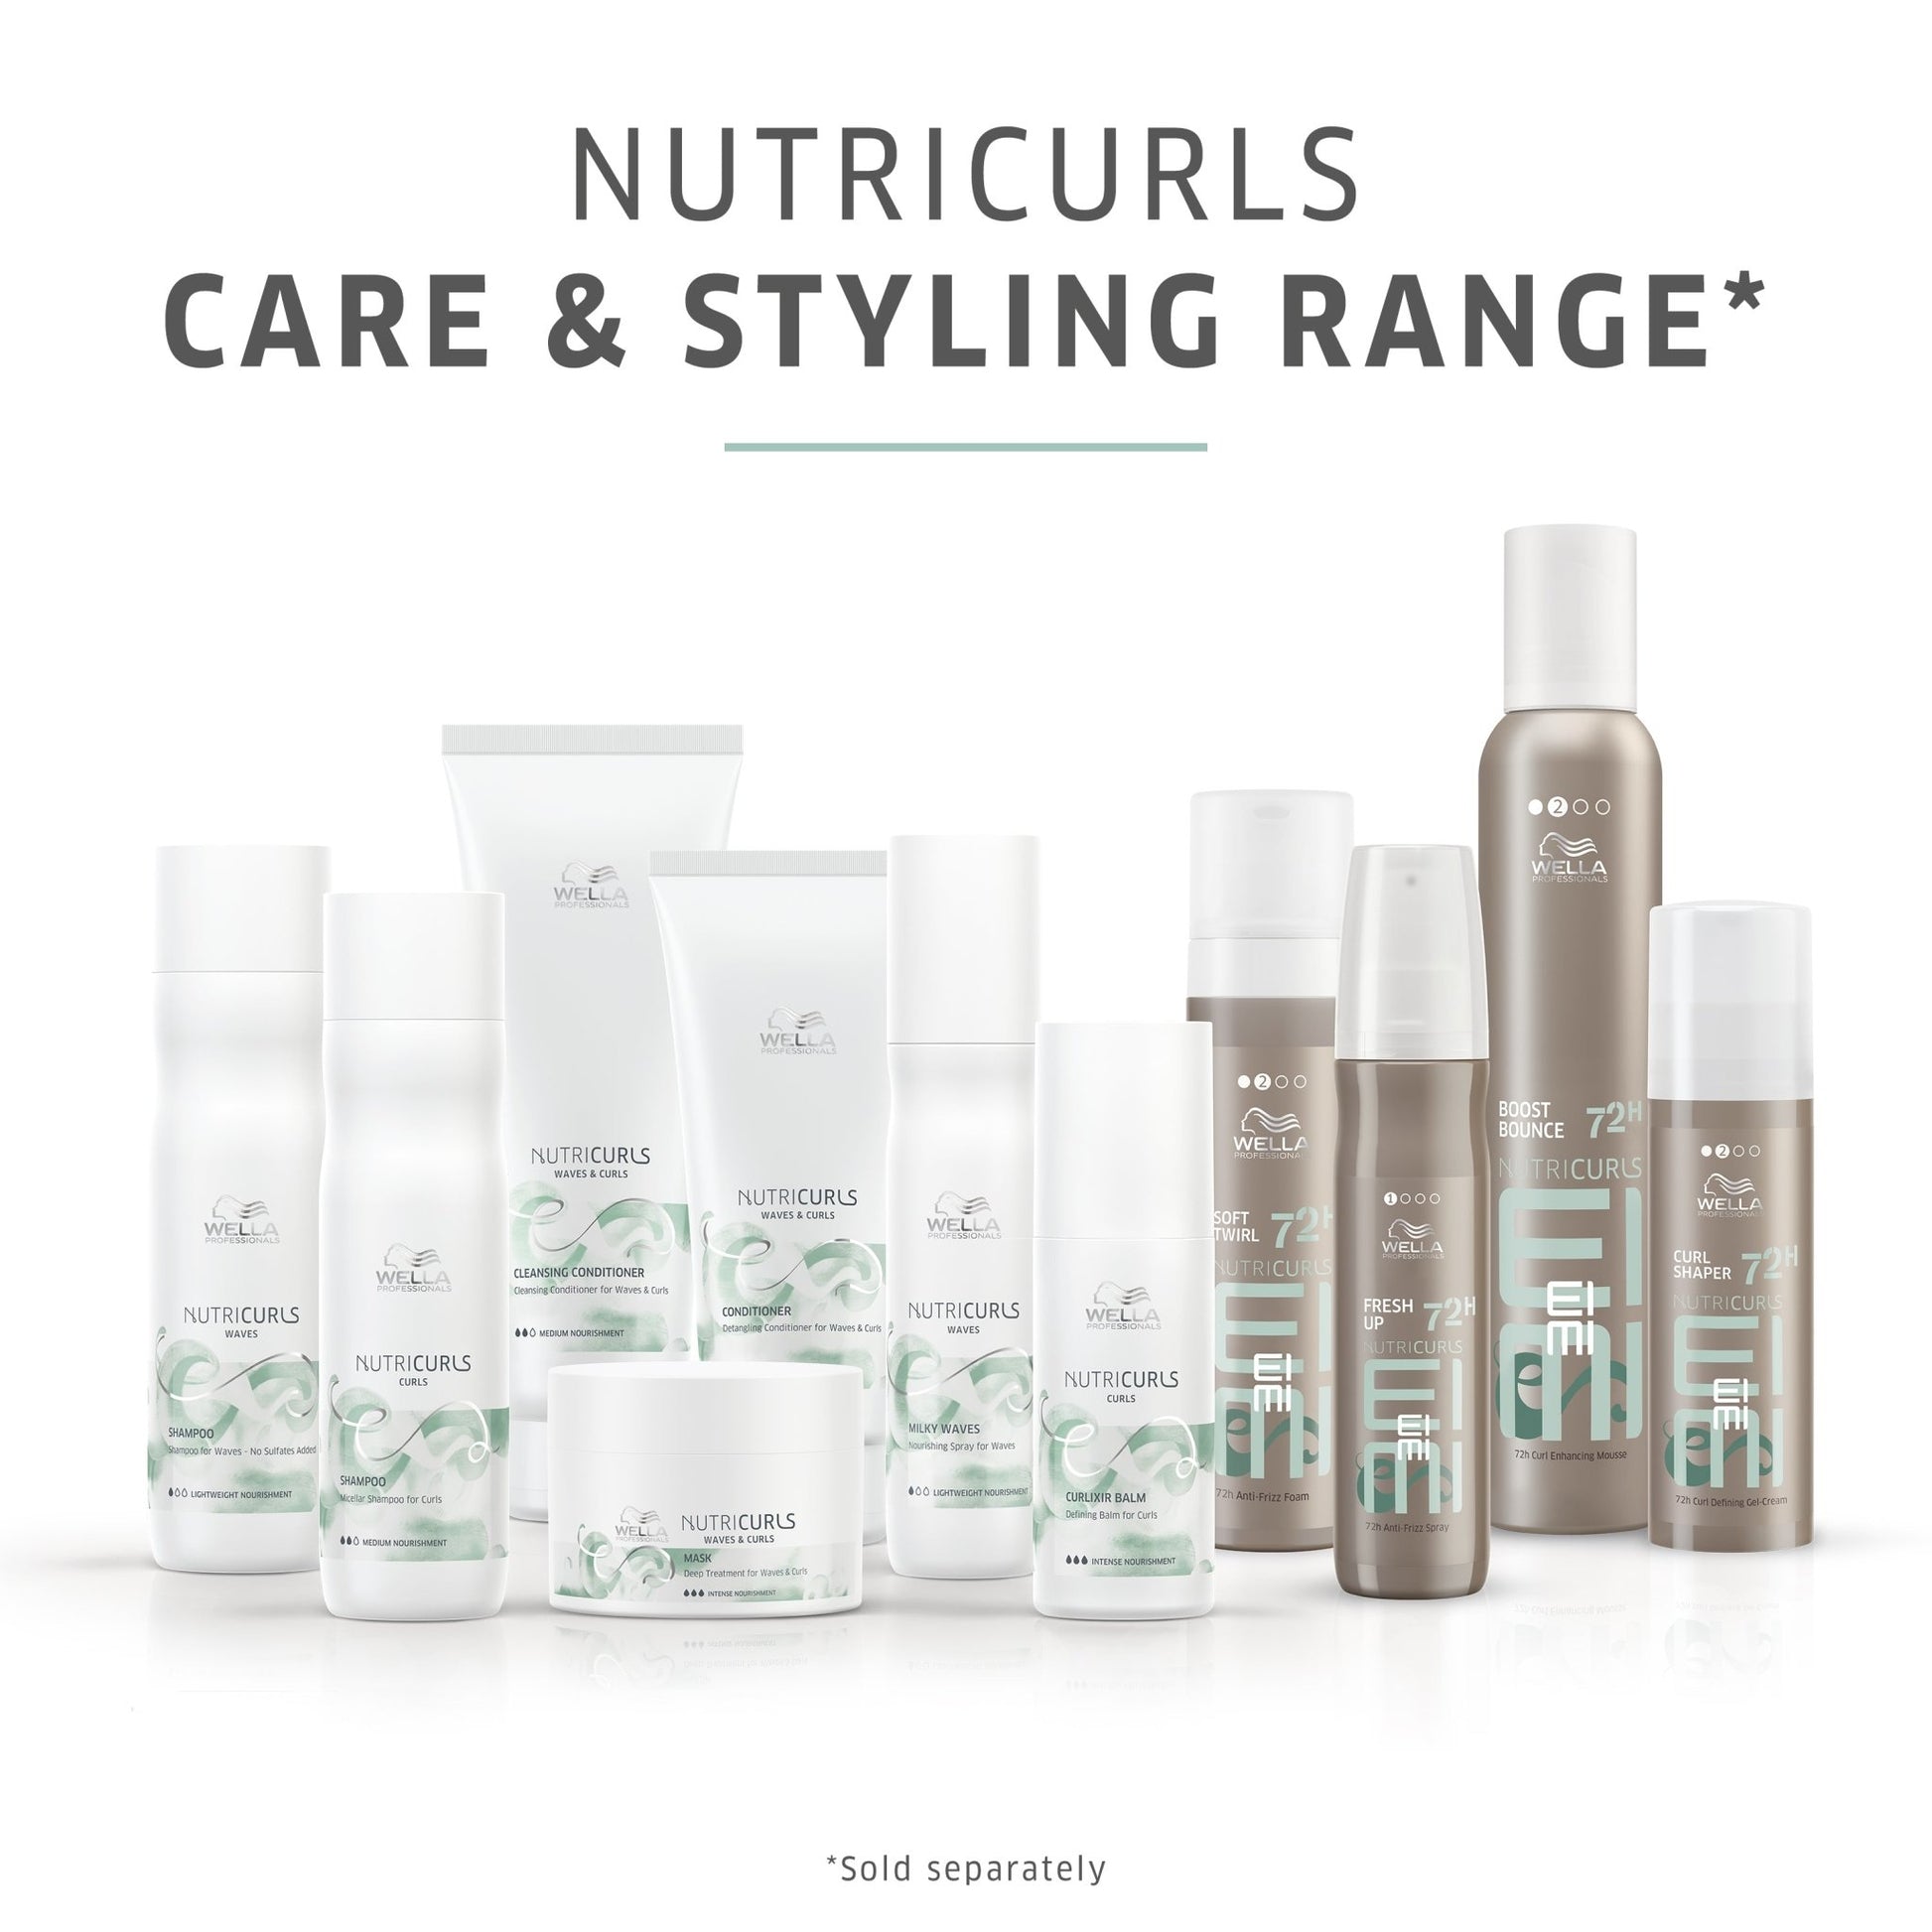 Micellar Shampoo for Curls | NUTRICURLS | WELLA - SH Salons